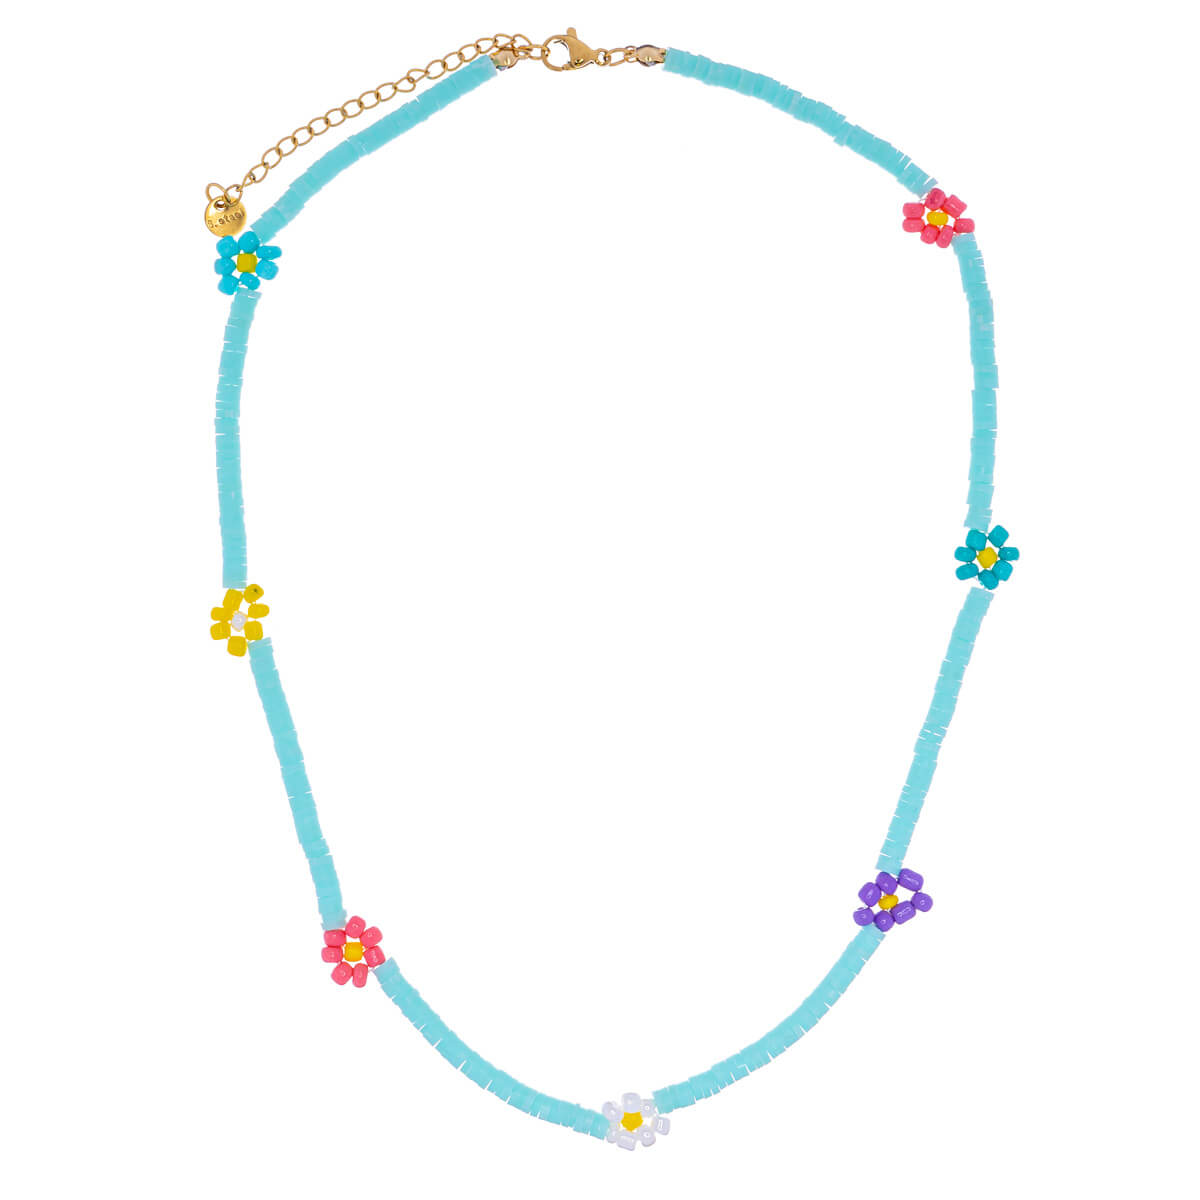 Flower neck beads necklace 40cm +5cm (Steel 316L)